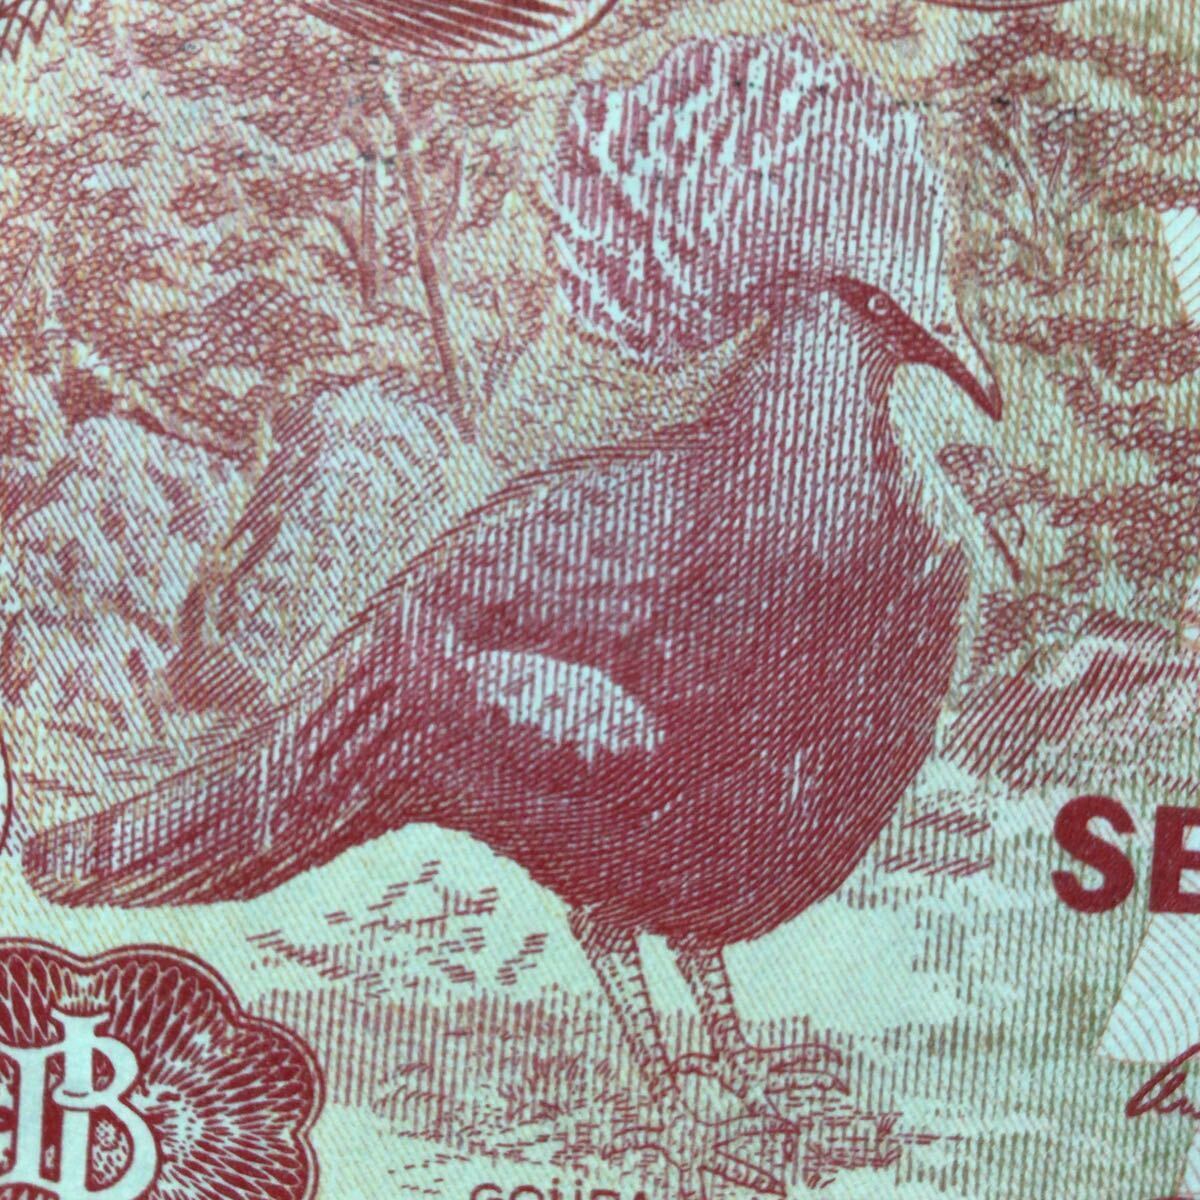 World Paper Money INDONESIA 100 Rupiah【1984】.の画像3